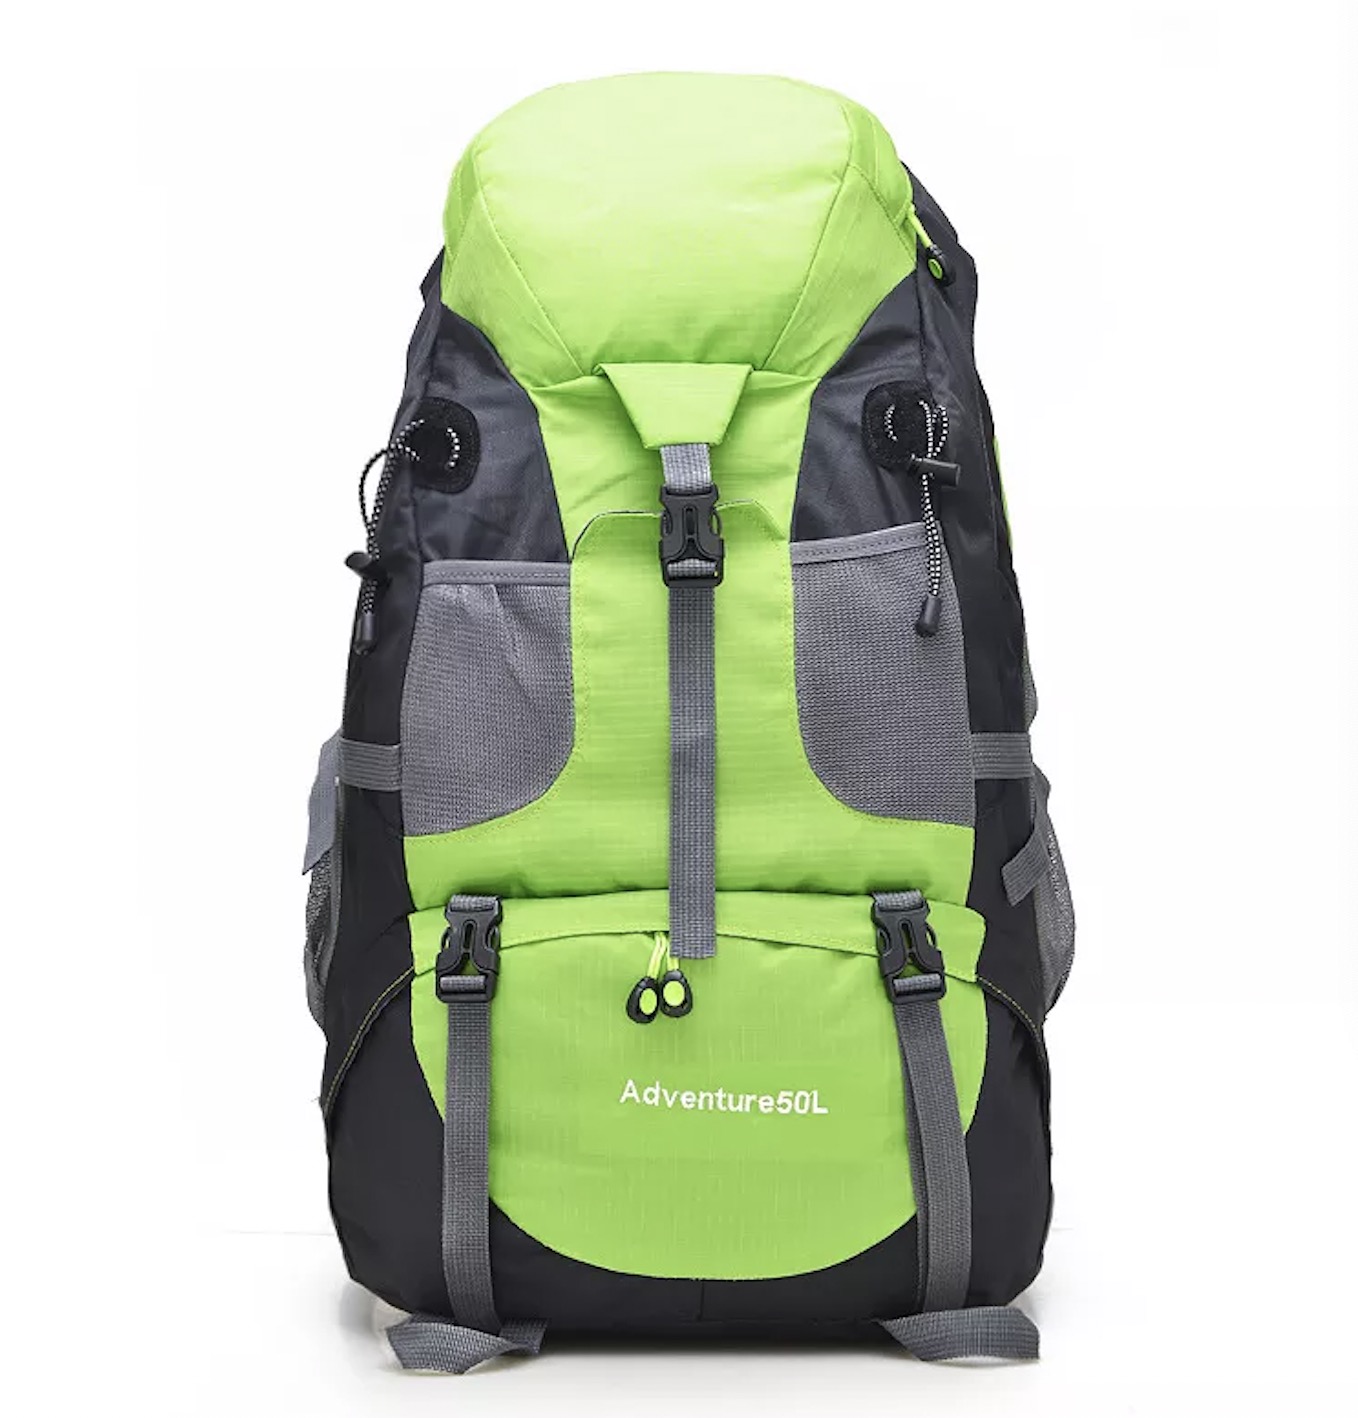 Mochila de senderismo al aire libre impermeable personalizada del deporte de la mochila del alza del diseño del OEM que acampa